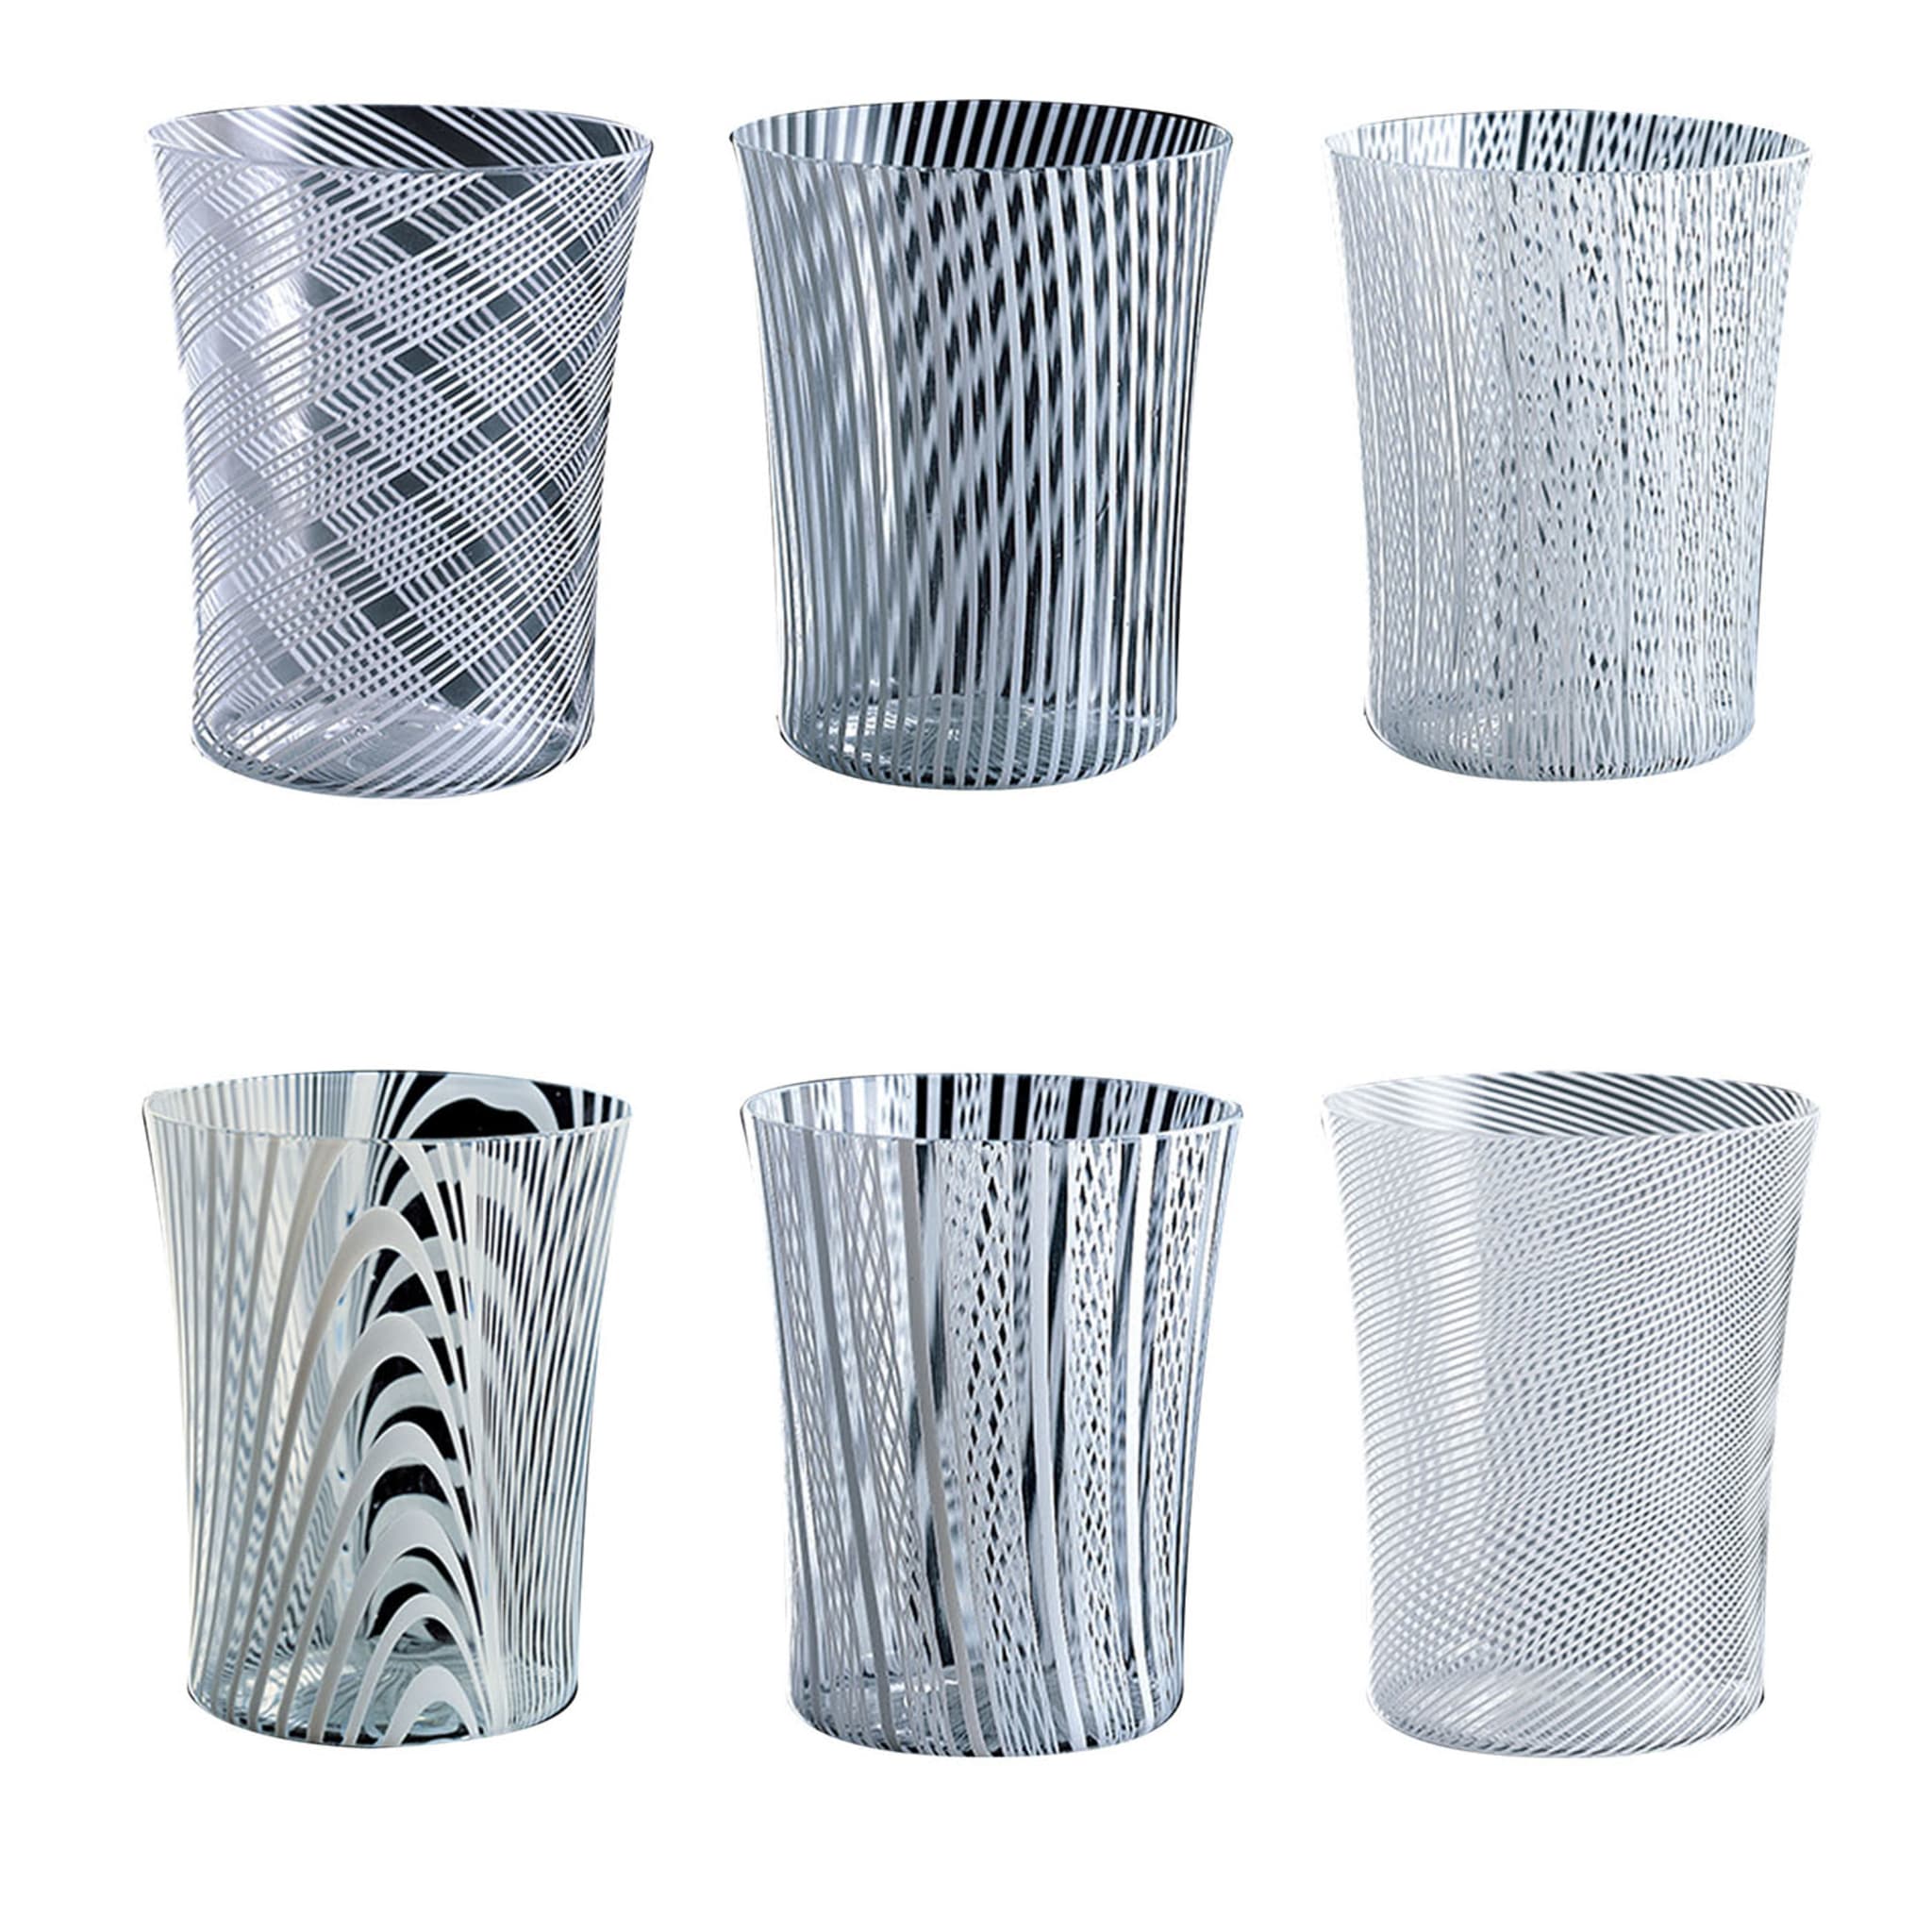 Canova Set of 6 White-Filigree Water Glasses by Stefano Marcato - Main view